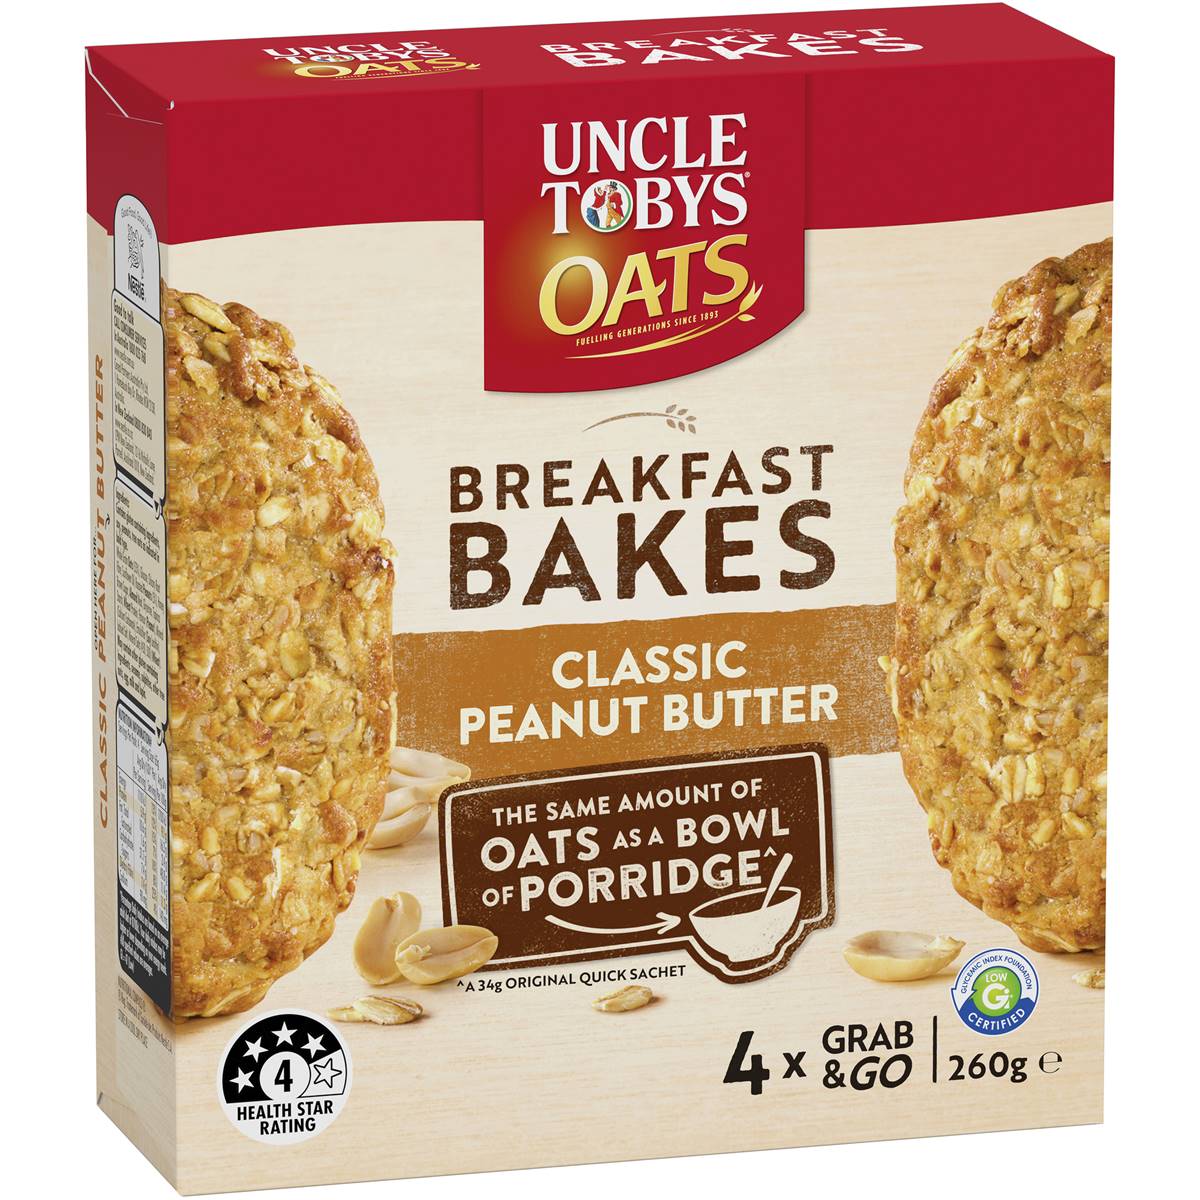 Uncle Tobys Oats Breakfast Bakes Classic Peanut Butter